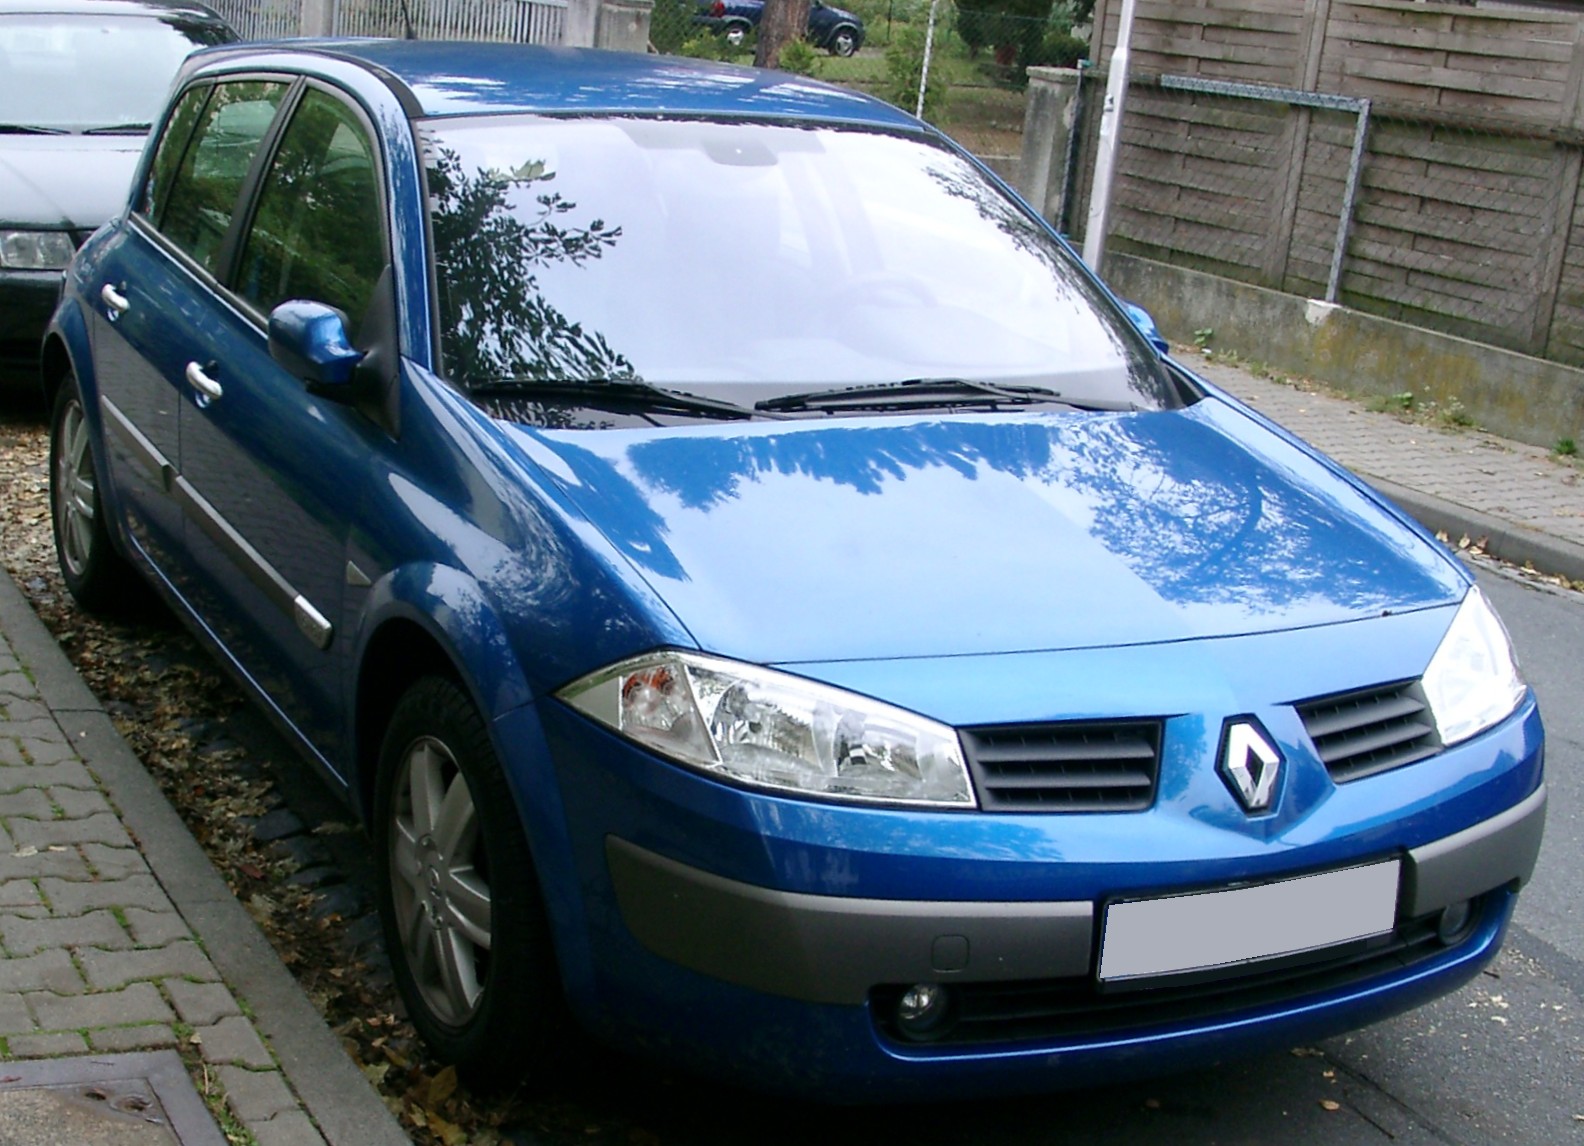 File:Renault Megane front 20071002.jpg - Wikimedia Commons